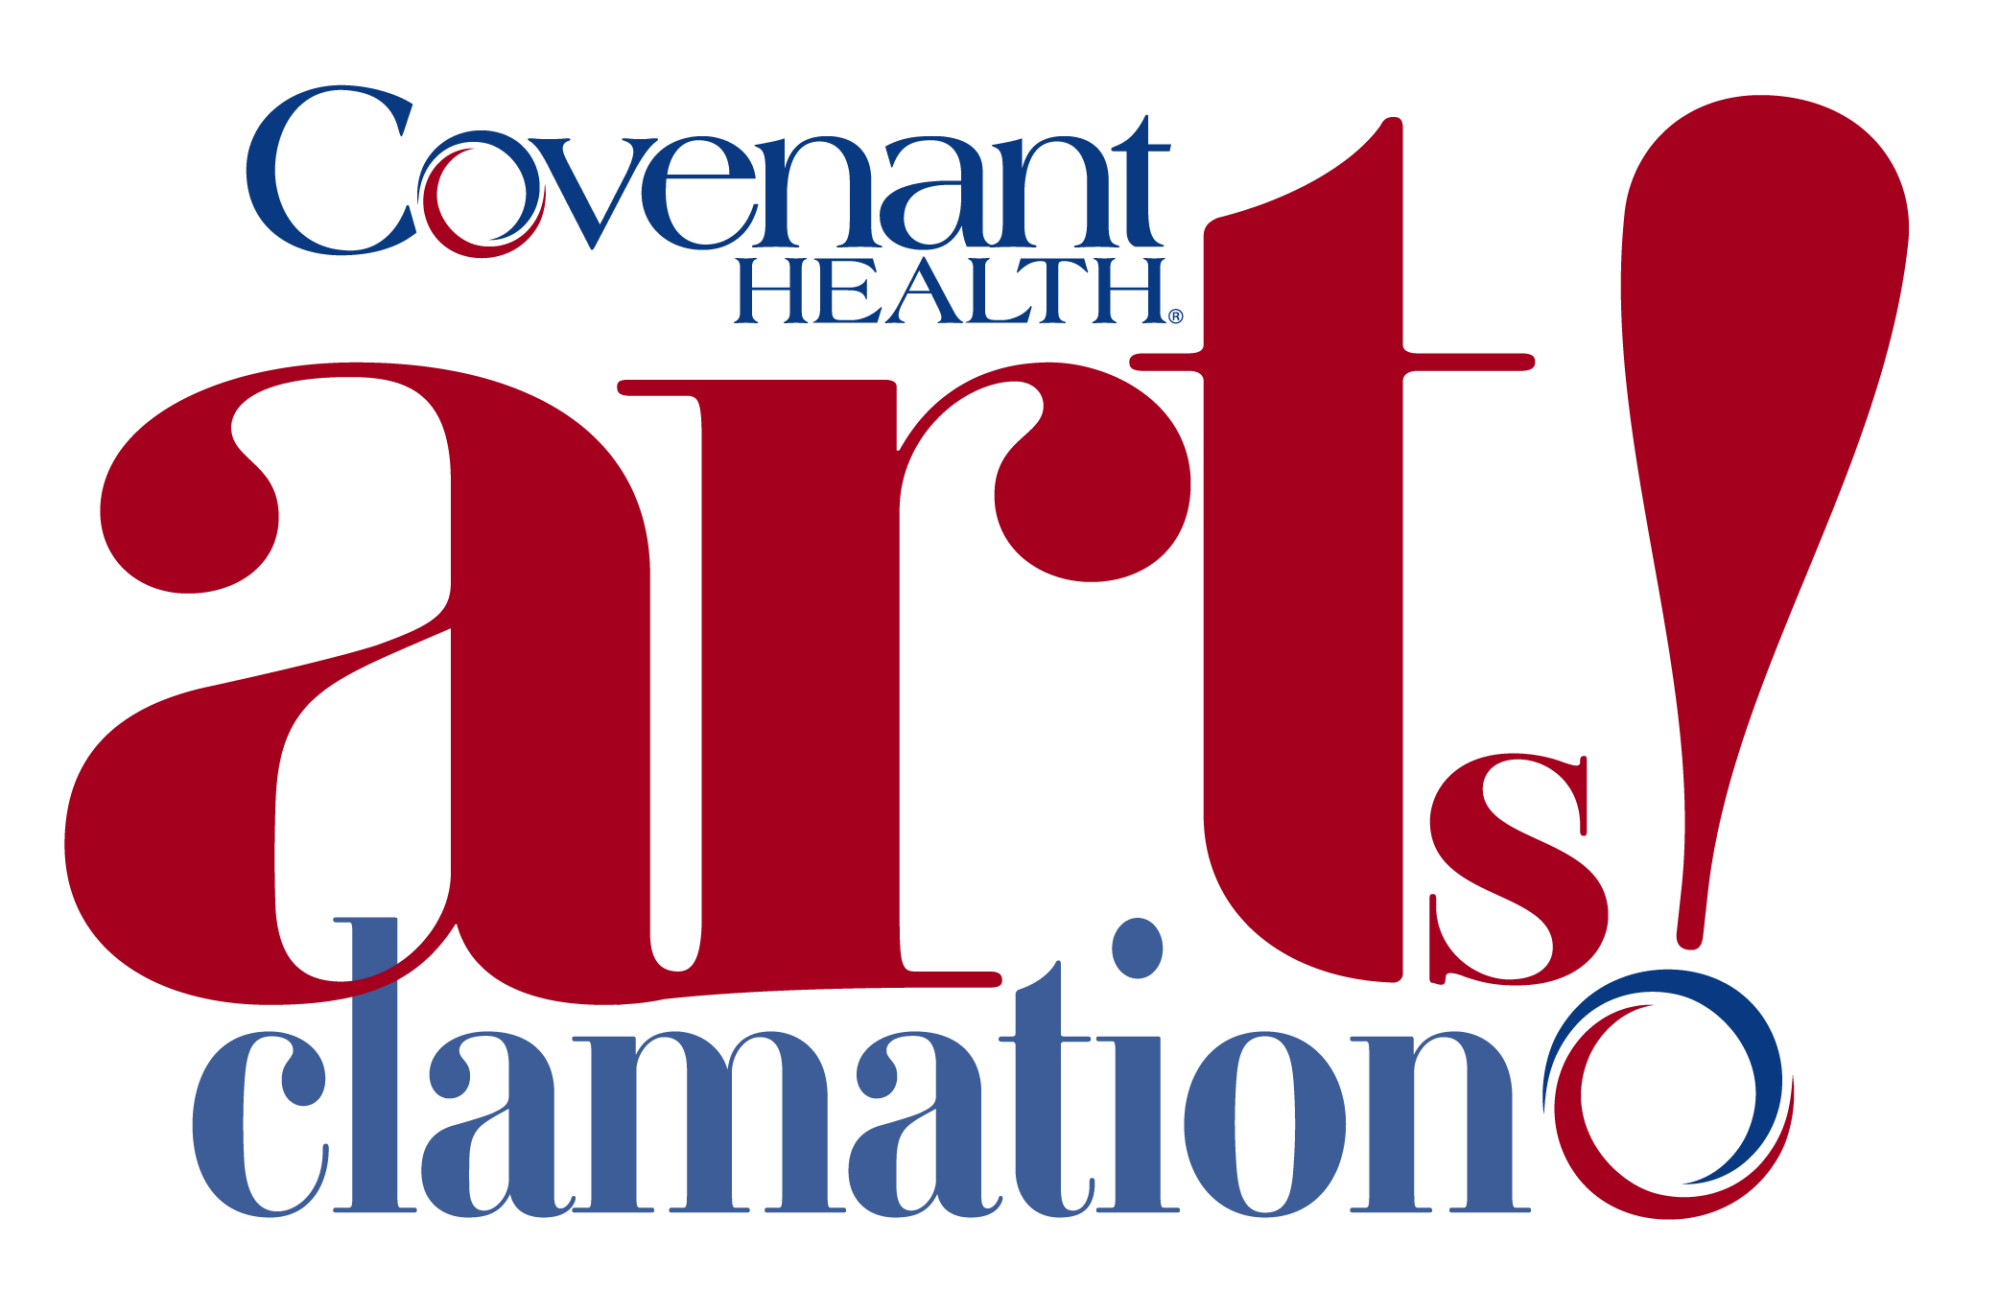 Artsclamation logo